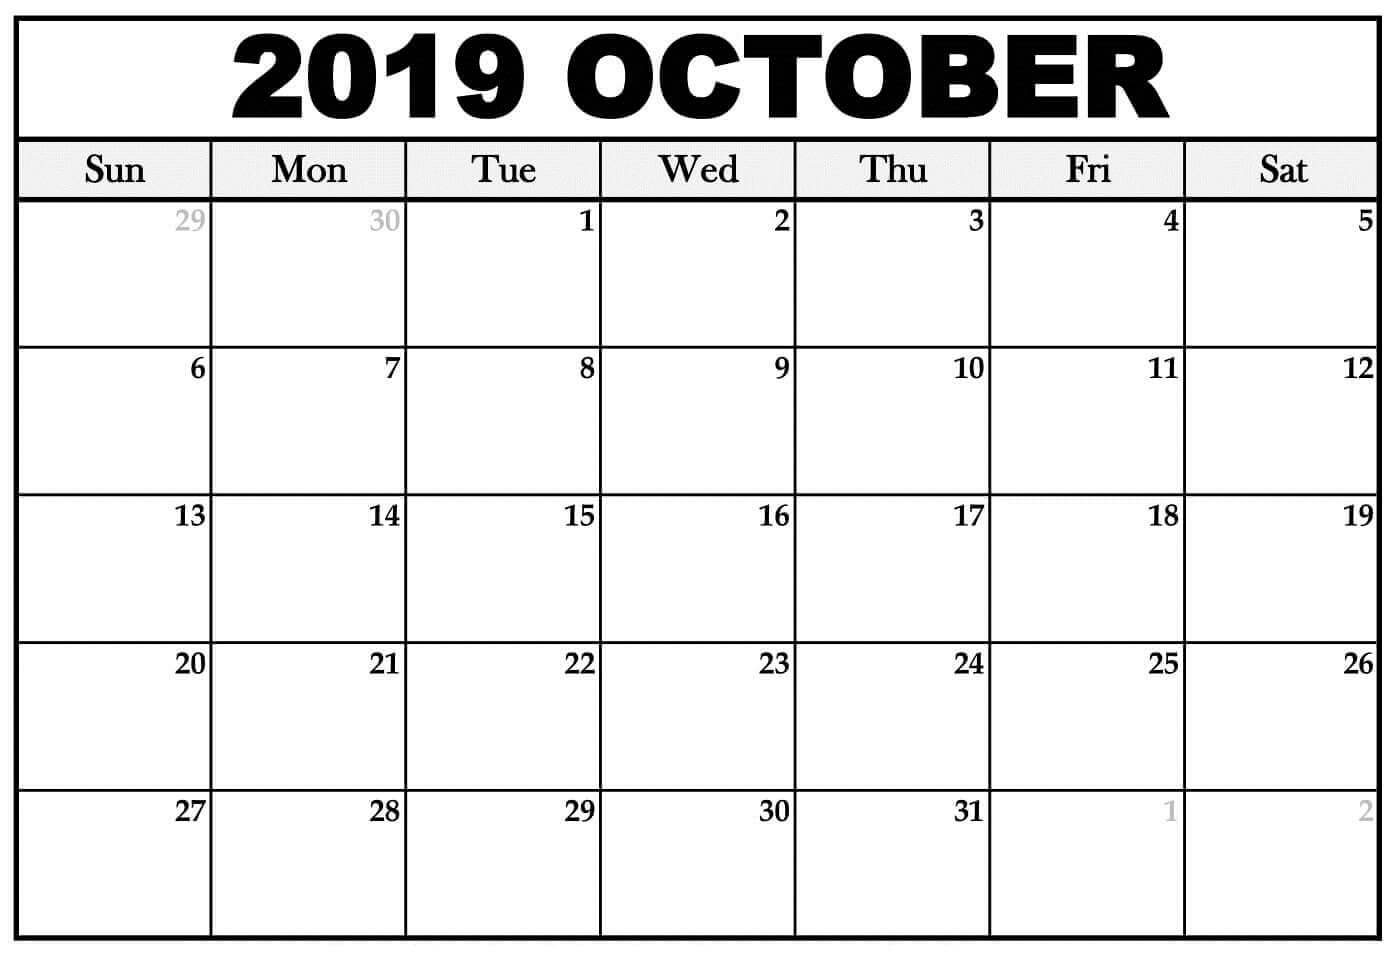 October 2019 Calendar Template For Kids | Free Printable With Blank Calendar Template For Kids